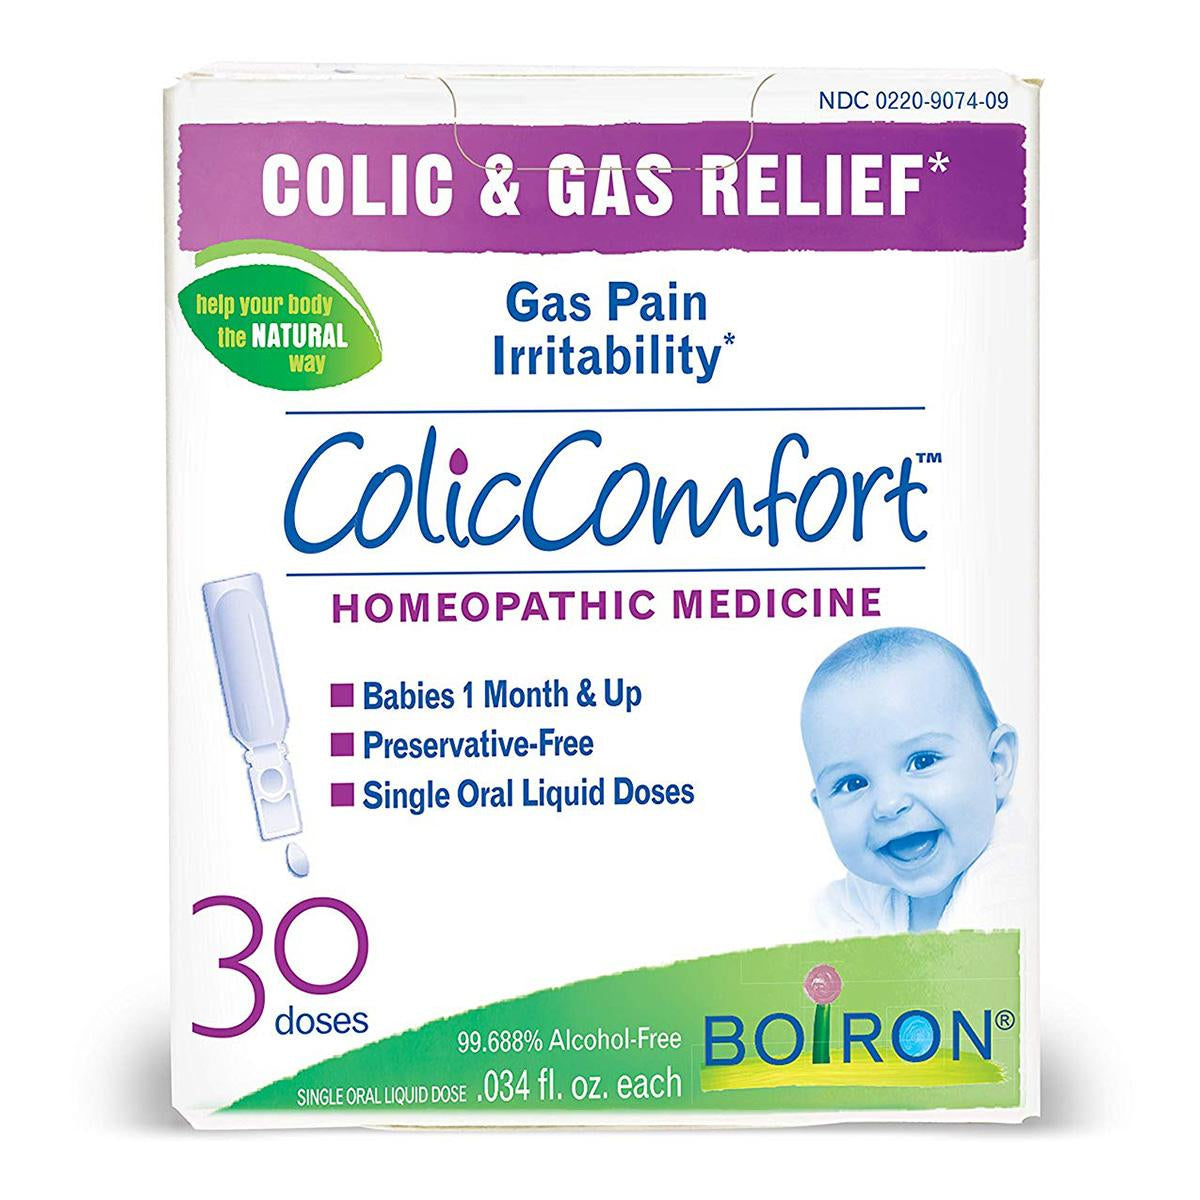 Primary image of ColicComfort Liquid Doses